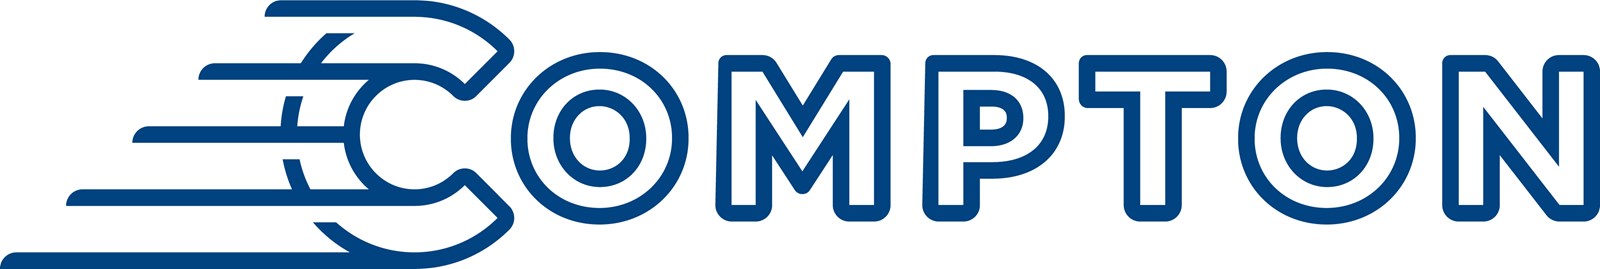 Blue Compton Logo.jpg